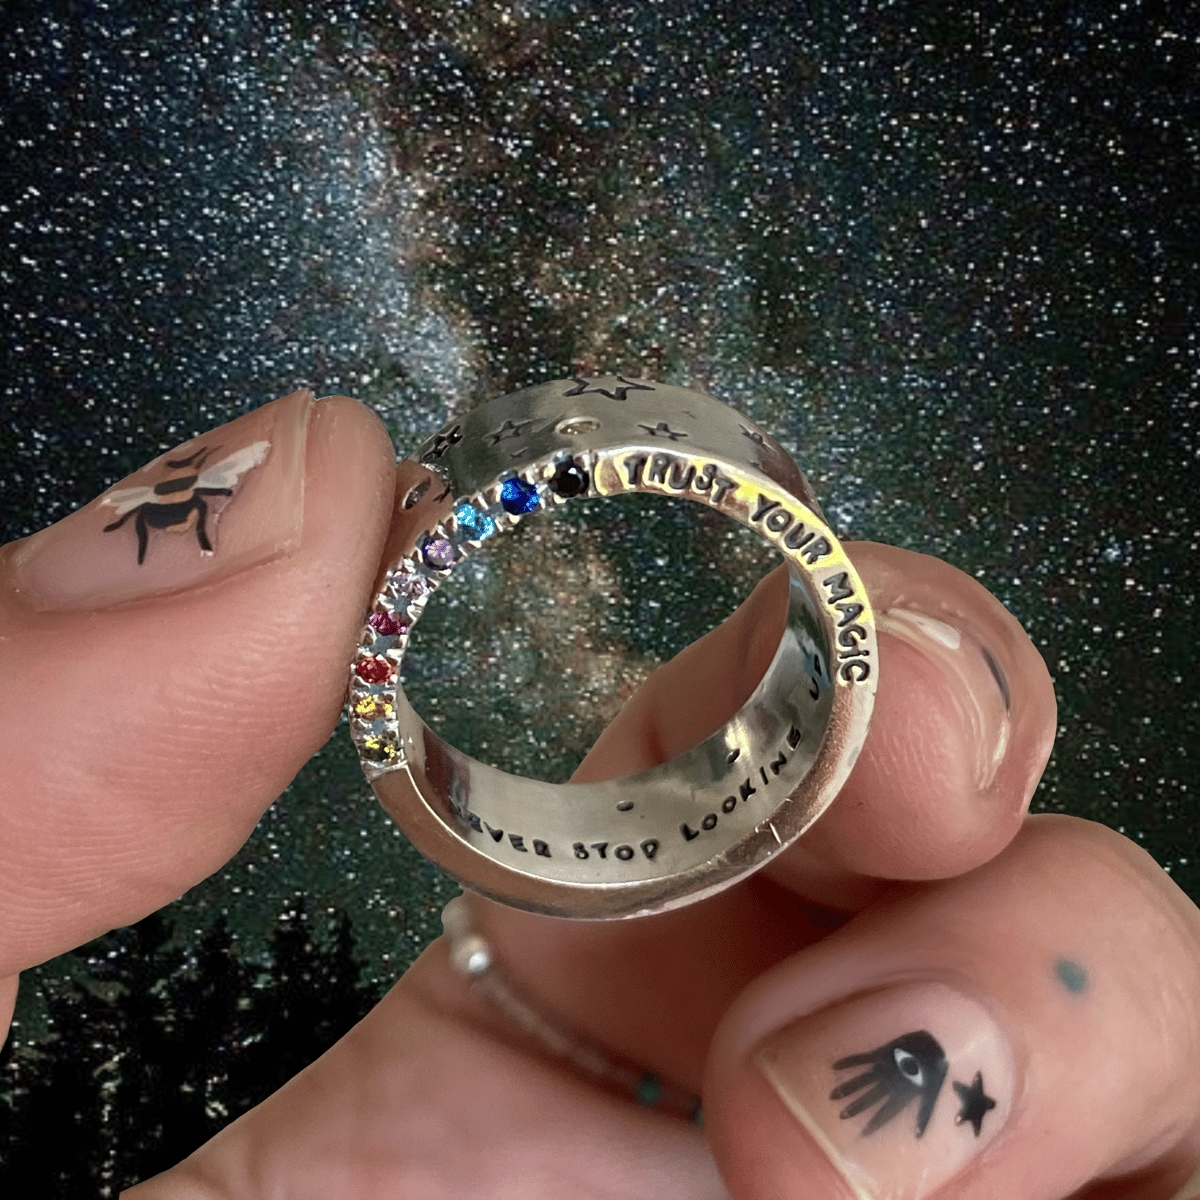 Image of trust your magic ring.